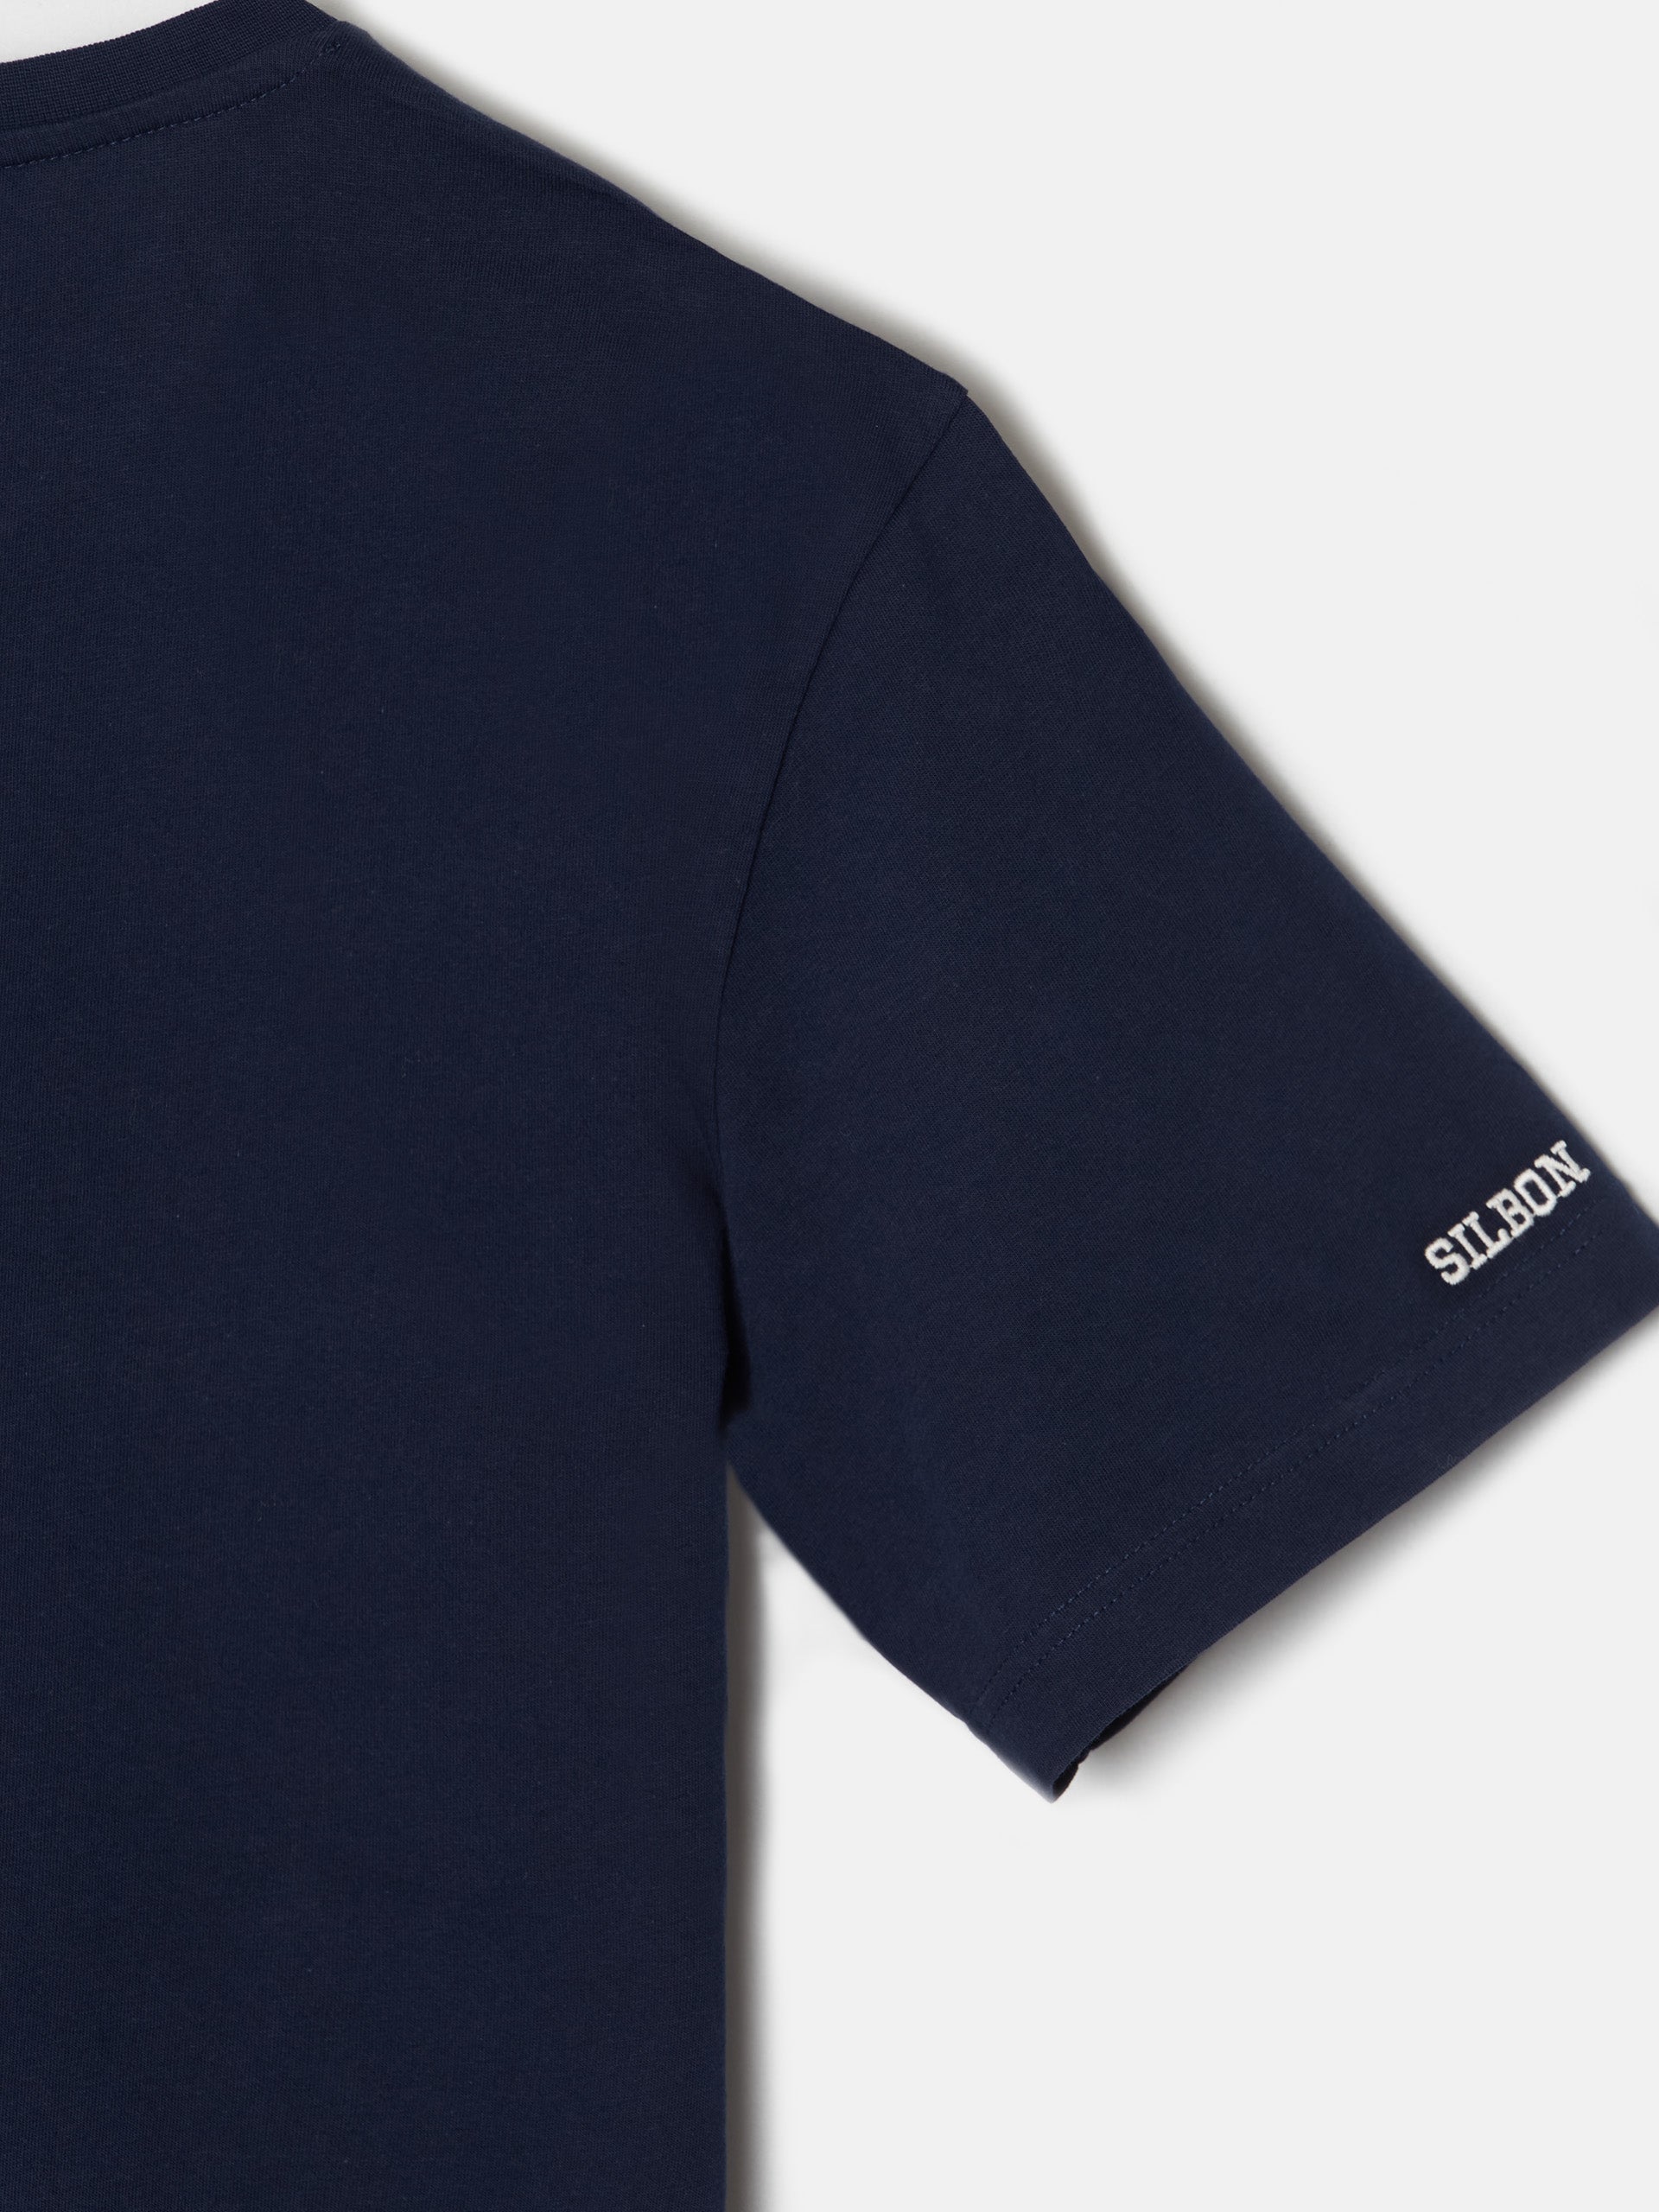 Camiseta silbon miniparche azul marino